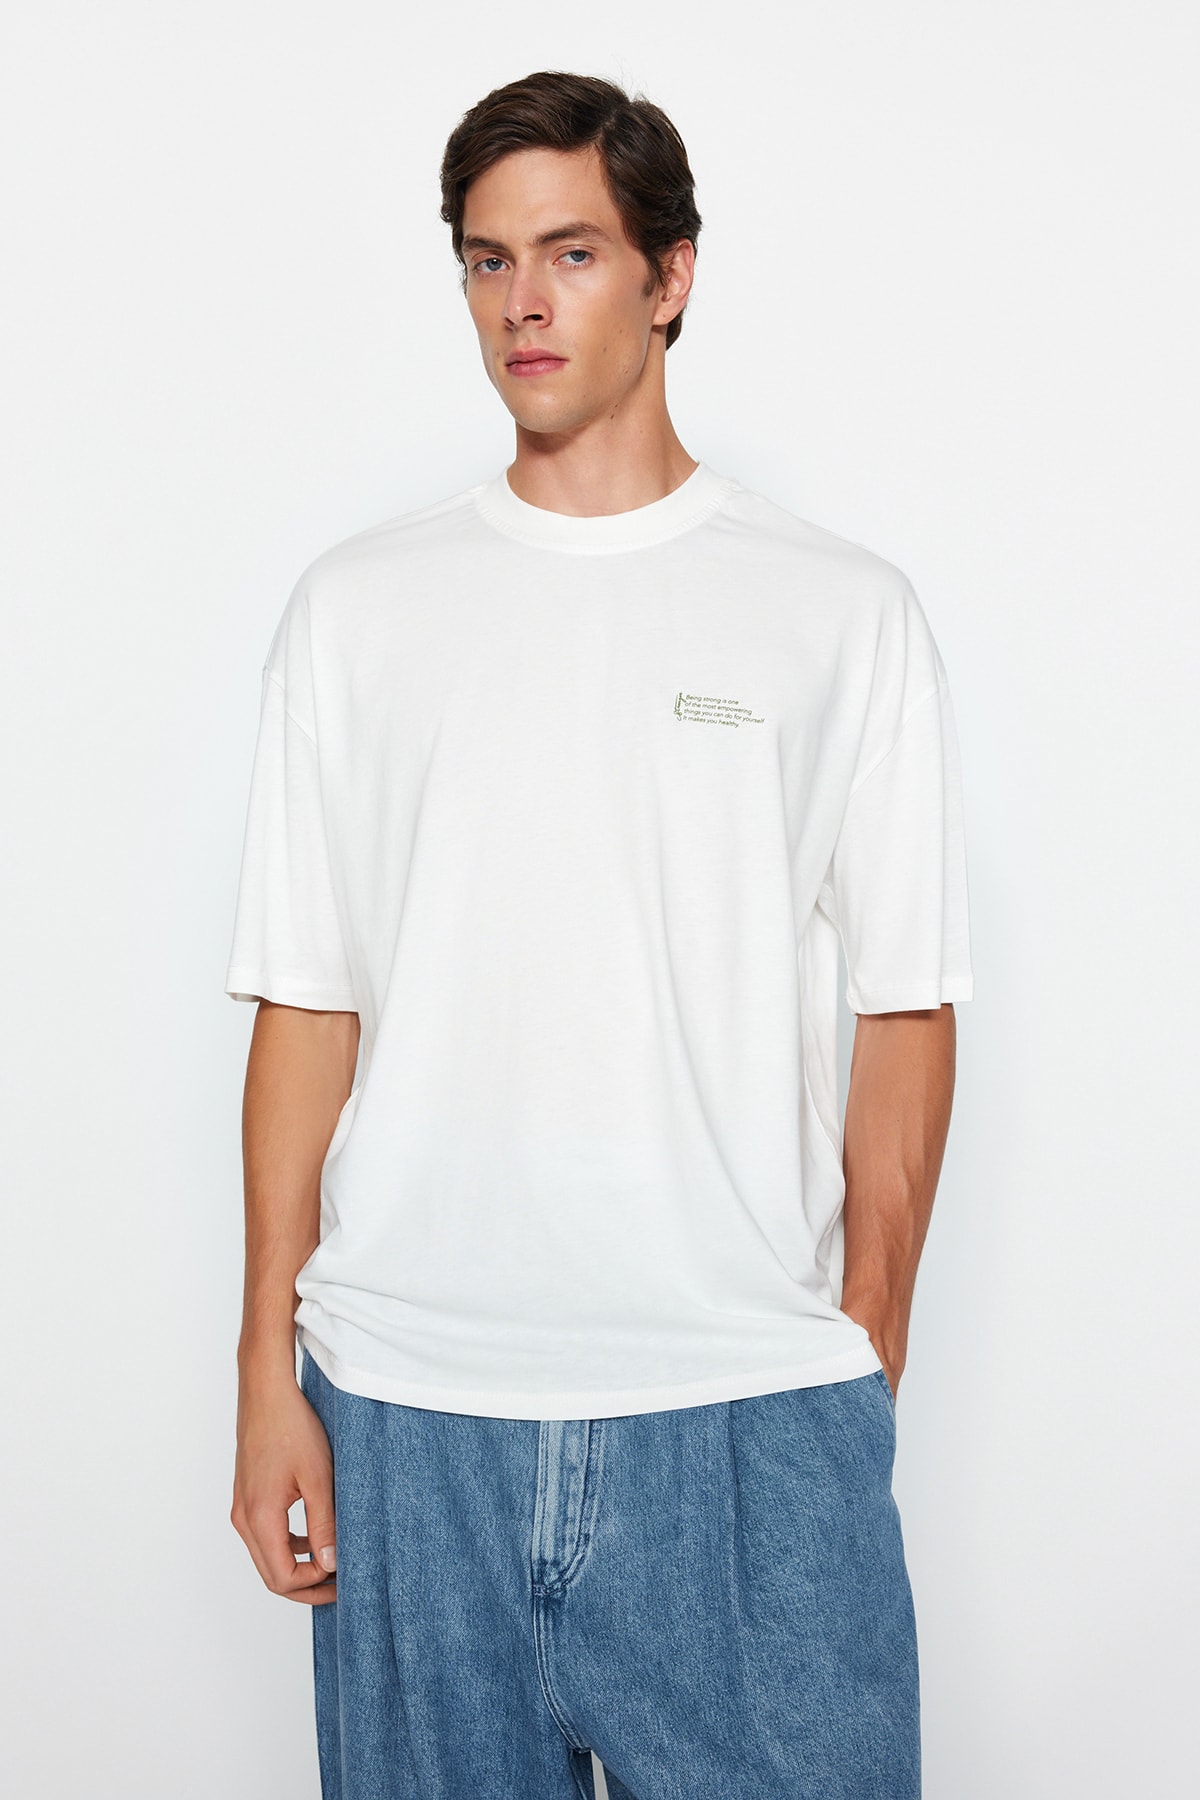 Trendyol Ecru Men's Oversize 100% Cotton Minimal Text Printed T-Shirt